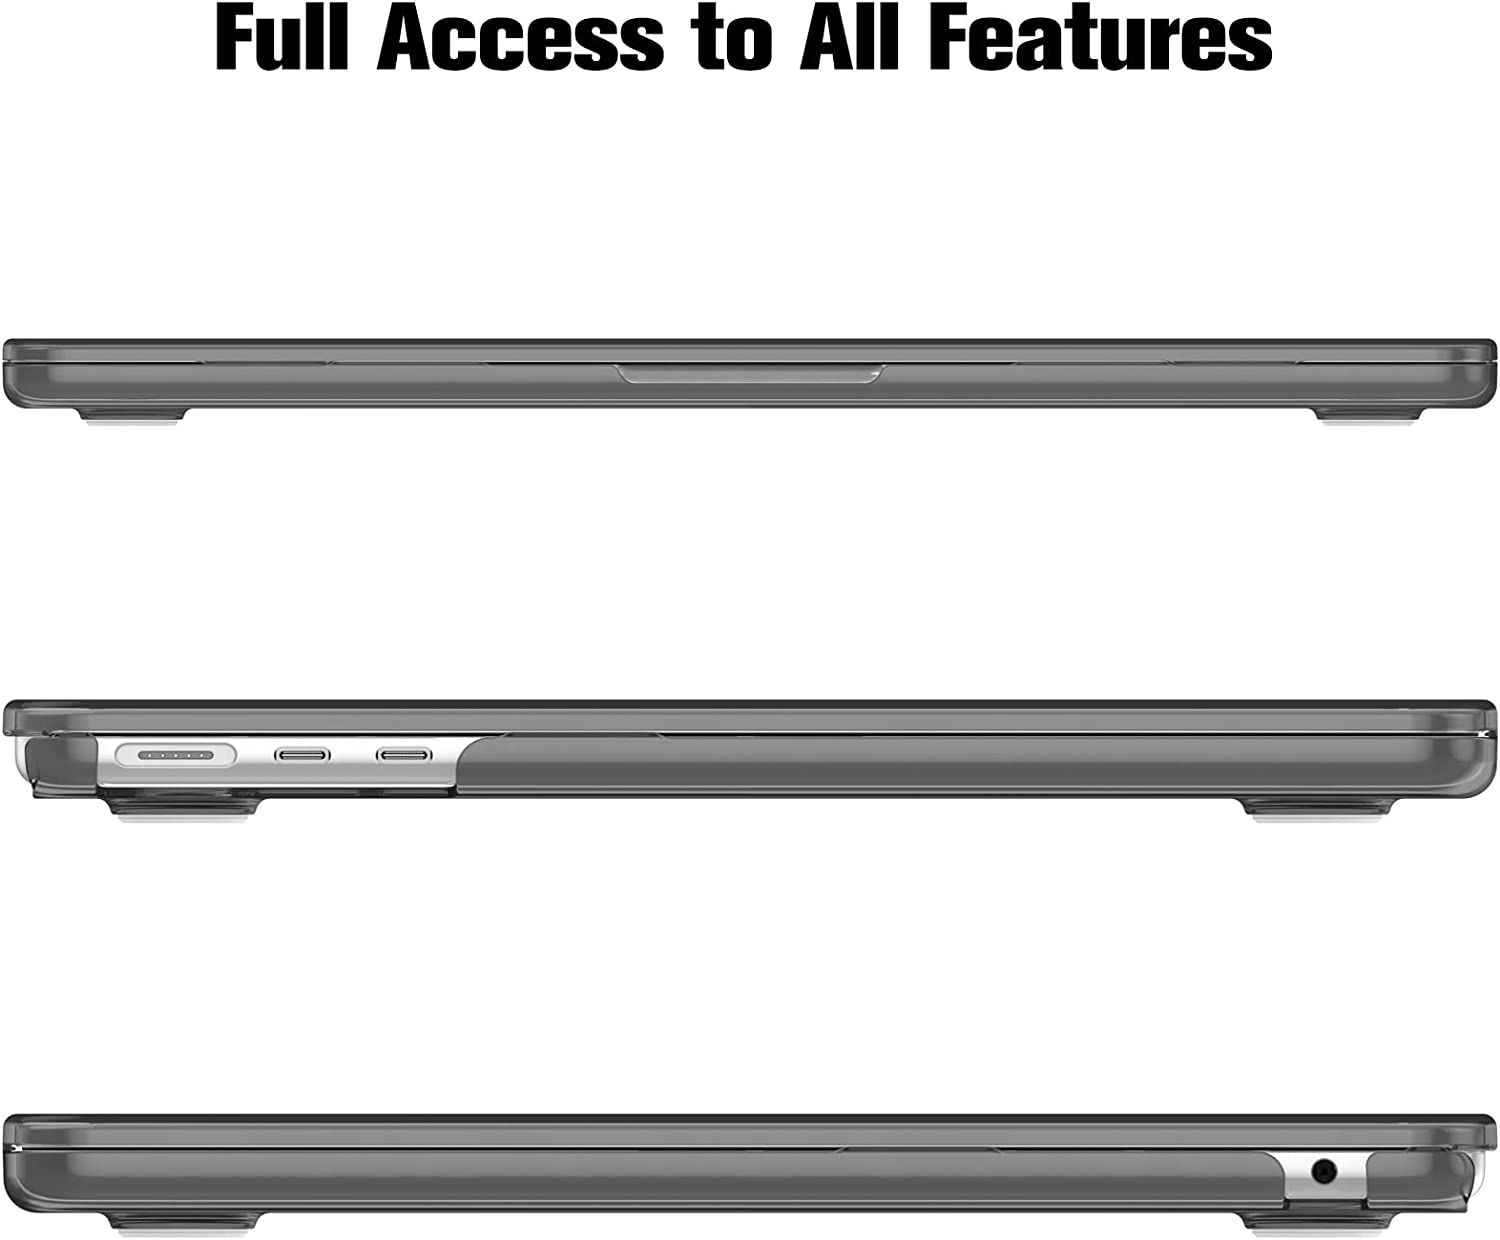 FINTIE Hülle MacBook Cover für Backcover Grau Apple PC